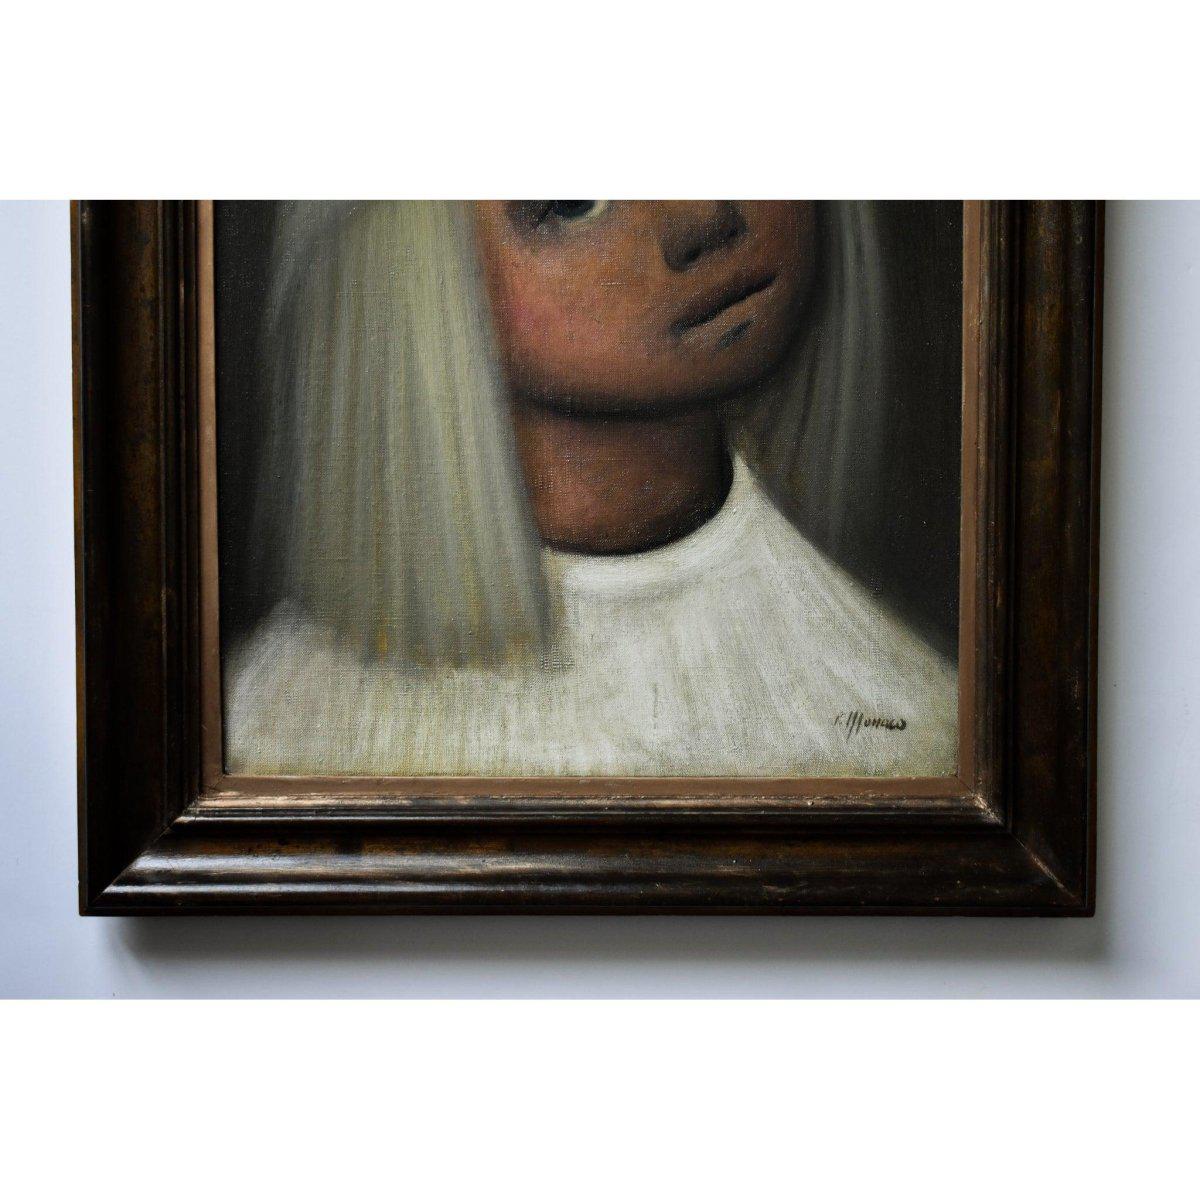 Vintage portrait oil painting girl original 1963 by Primaldo Monaco for sale at Winckelmann Gallery